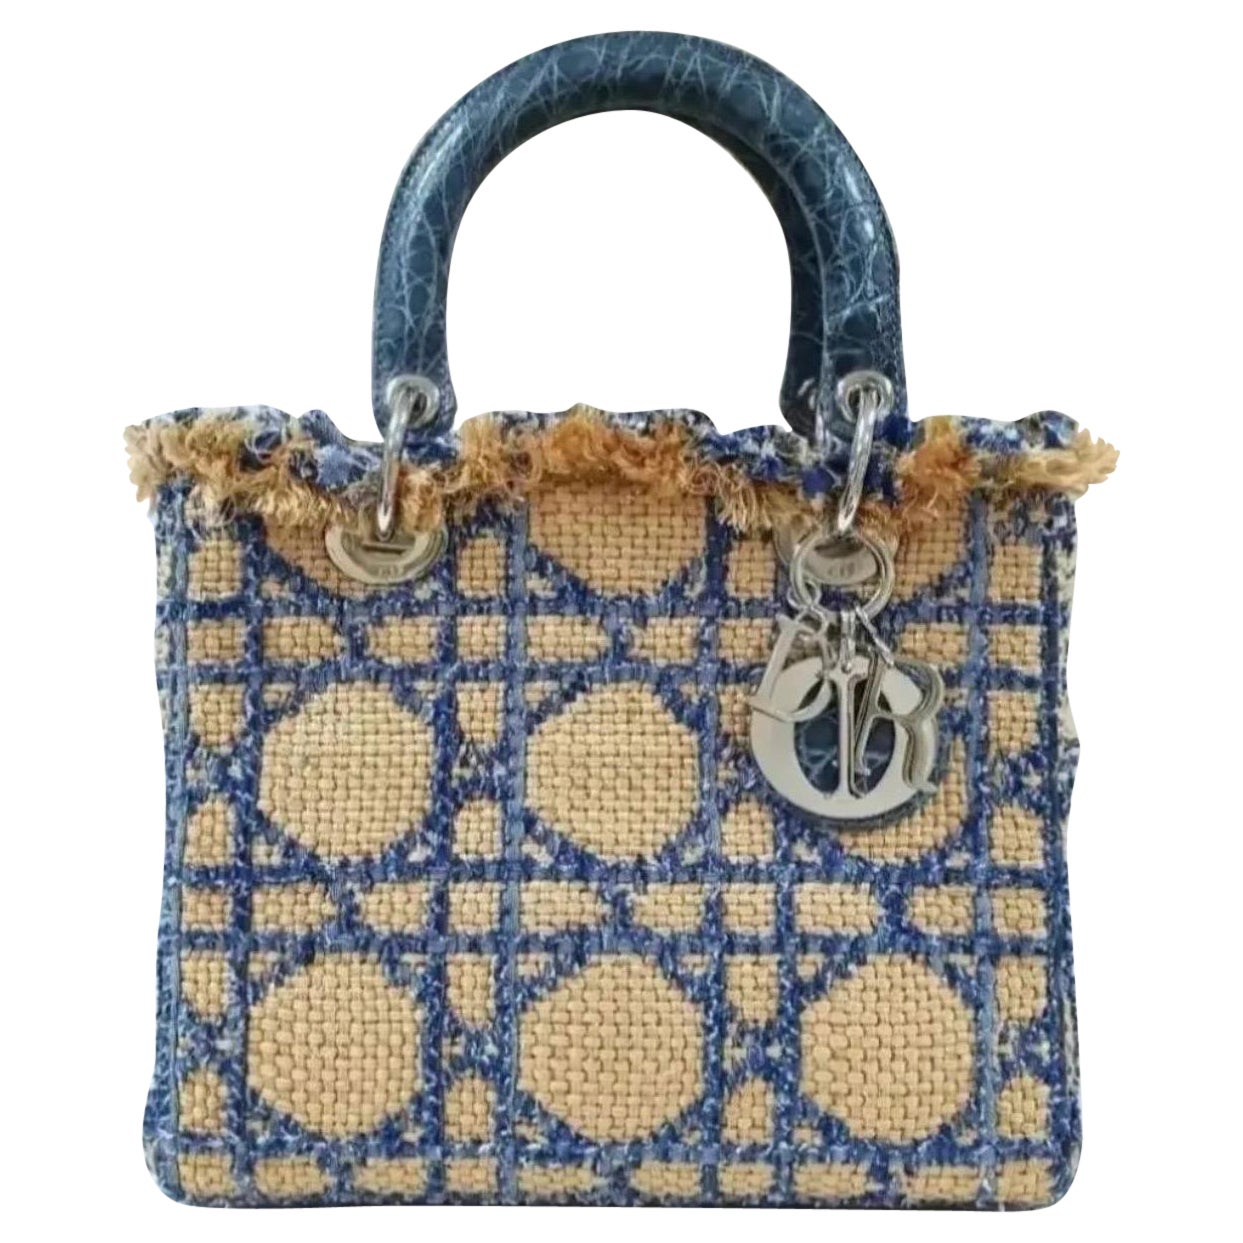 Where can I buy Dior handbags?